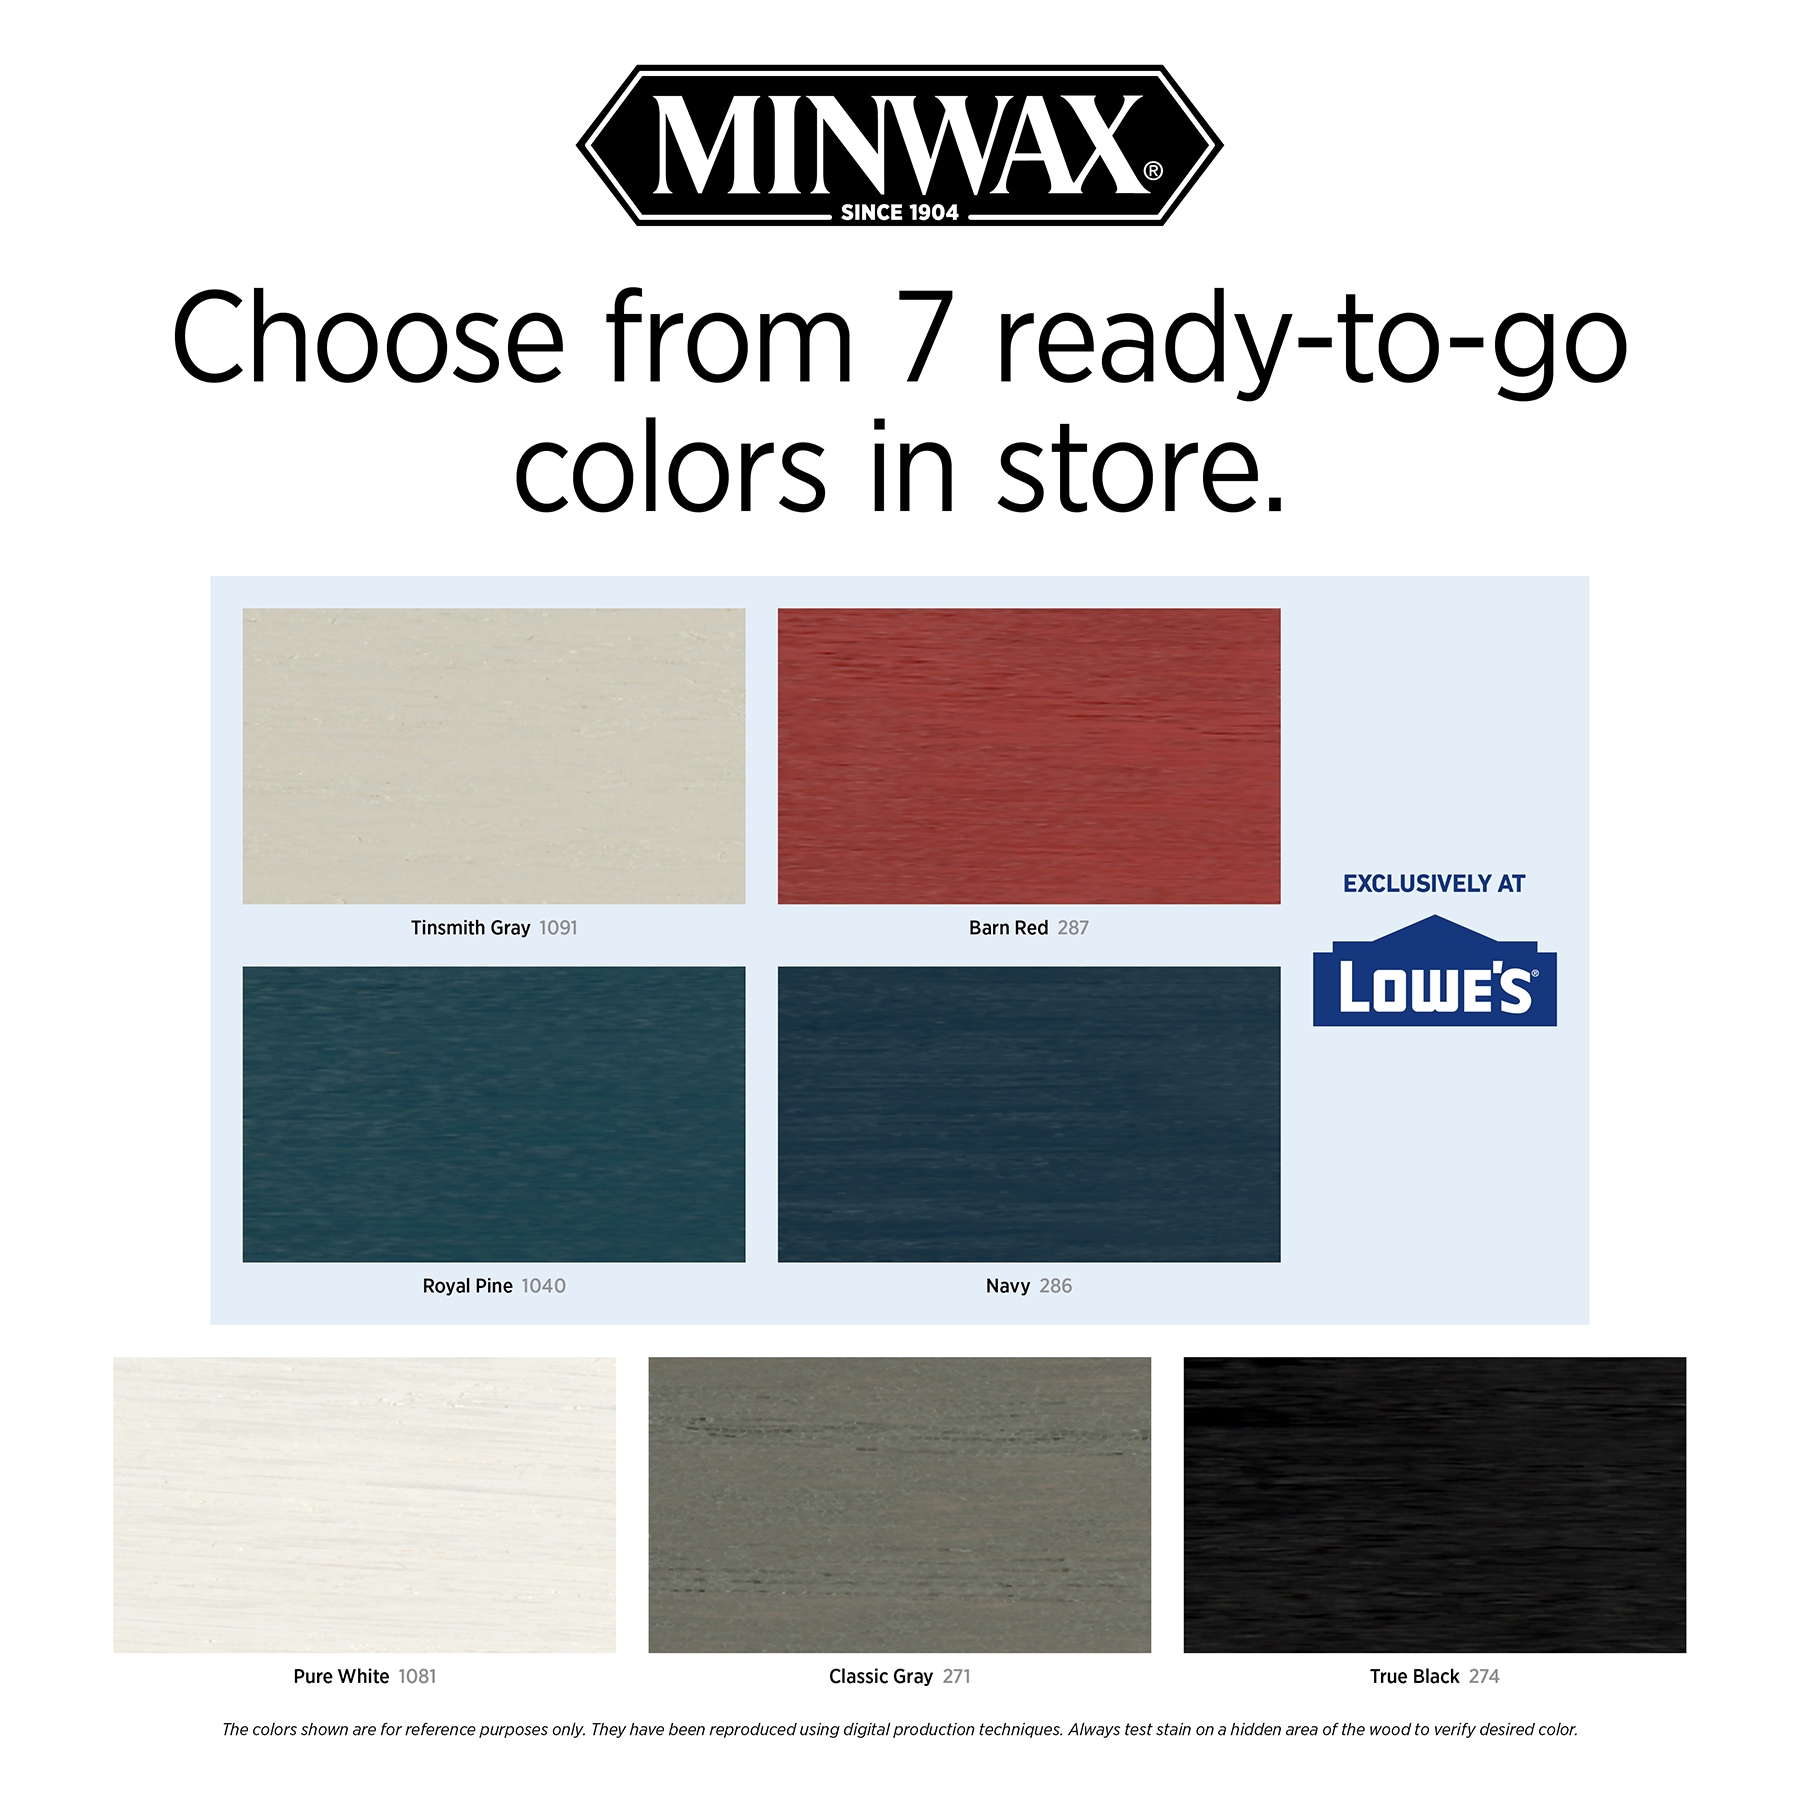 Minwax Wood Finish Water-Based Denim Blue Mw1070 Solid Interior